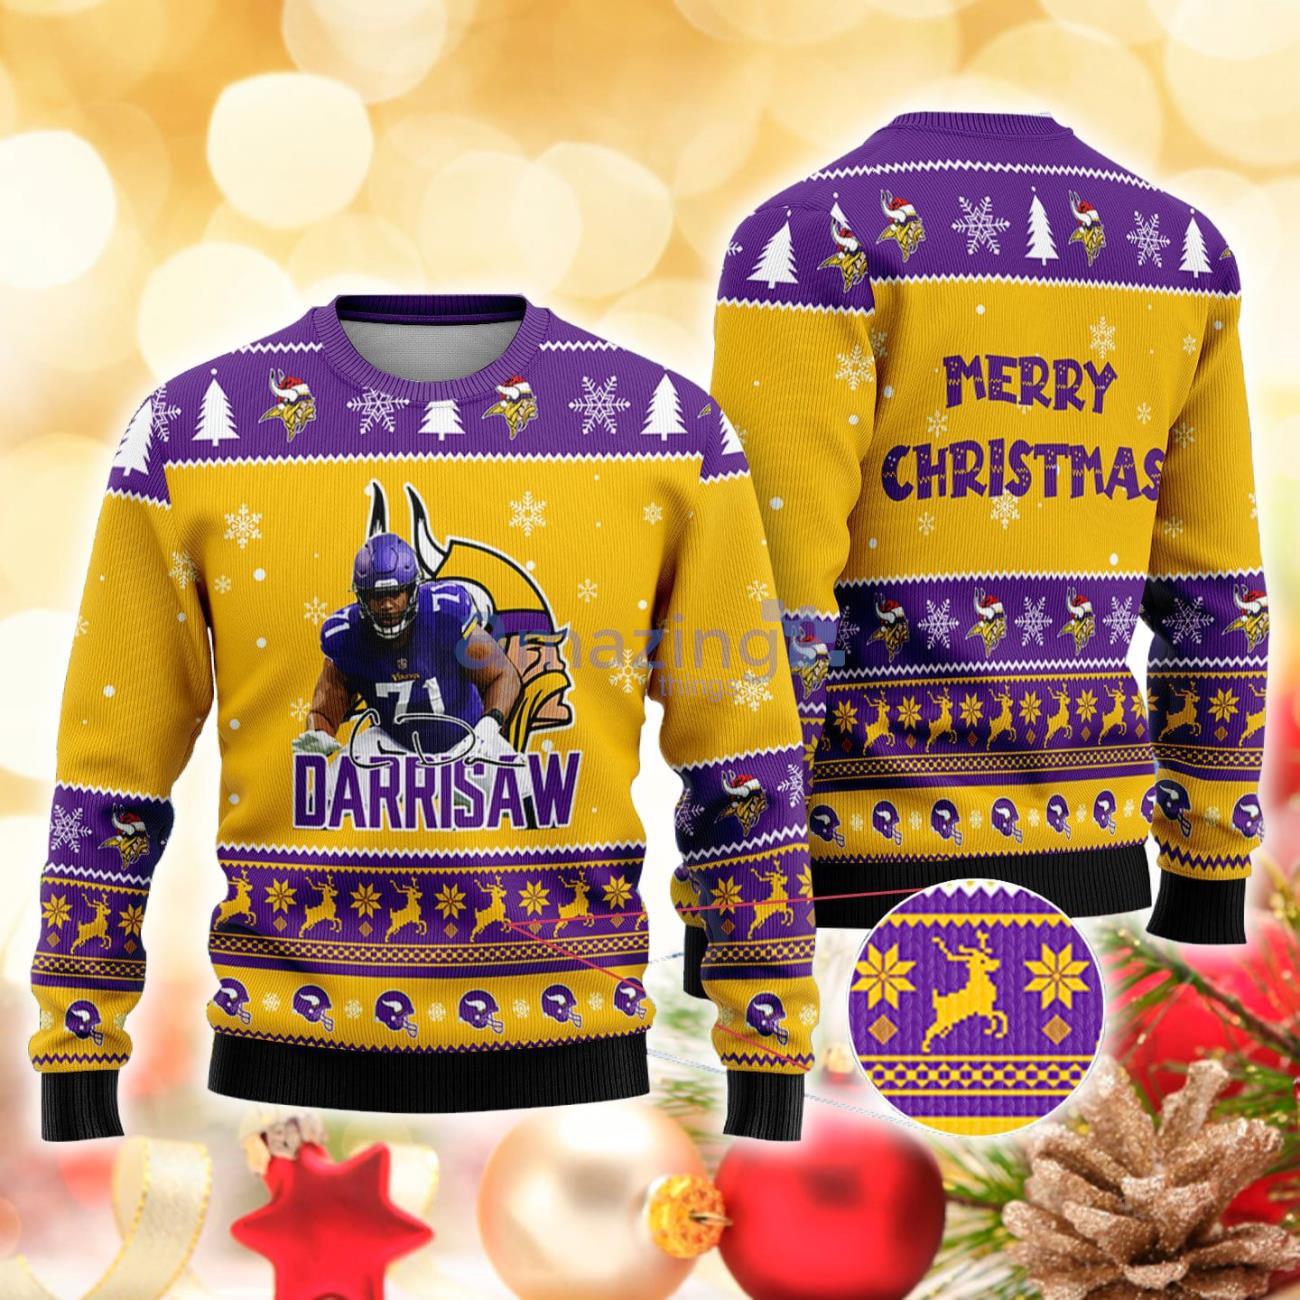 Minnesota Vikings - Christian Darrisaw Christmas Knitted Sweater